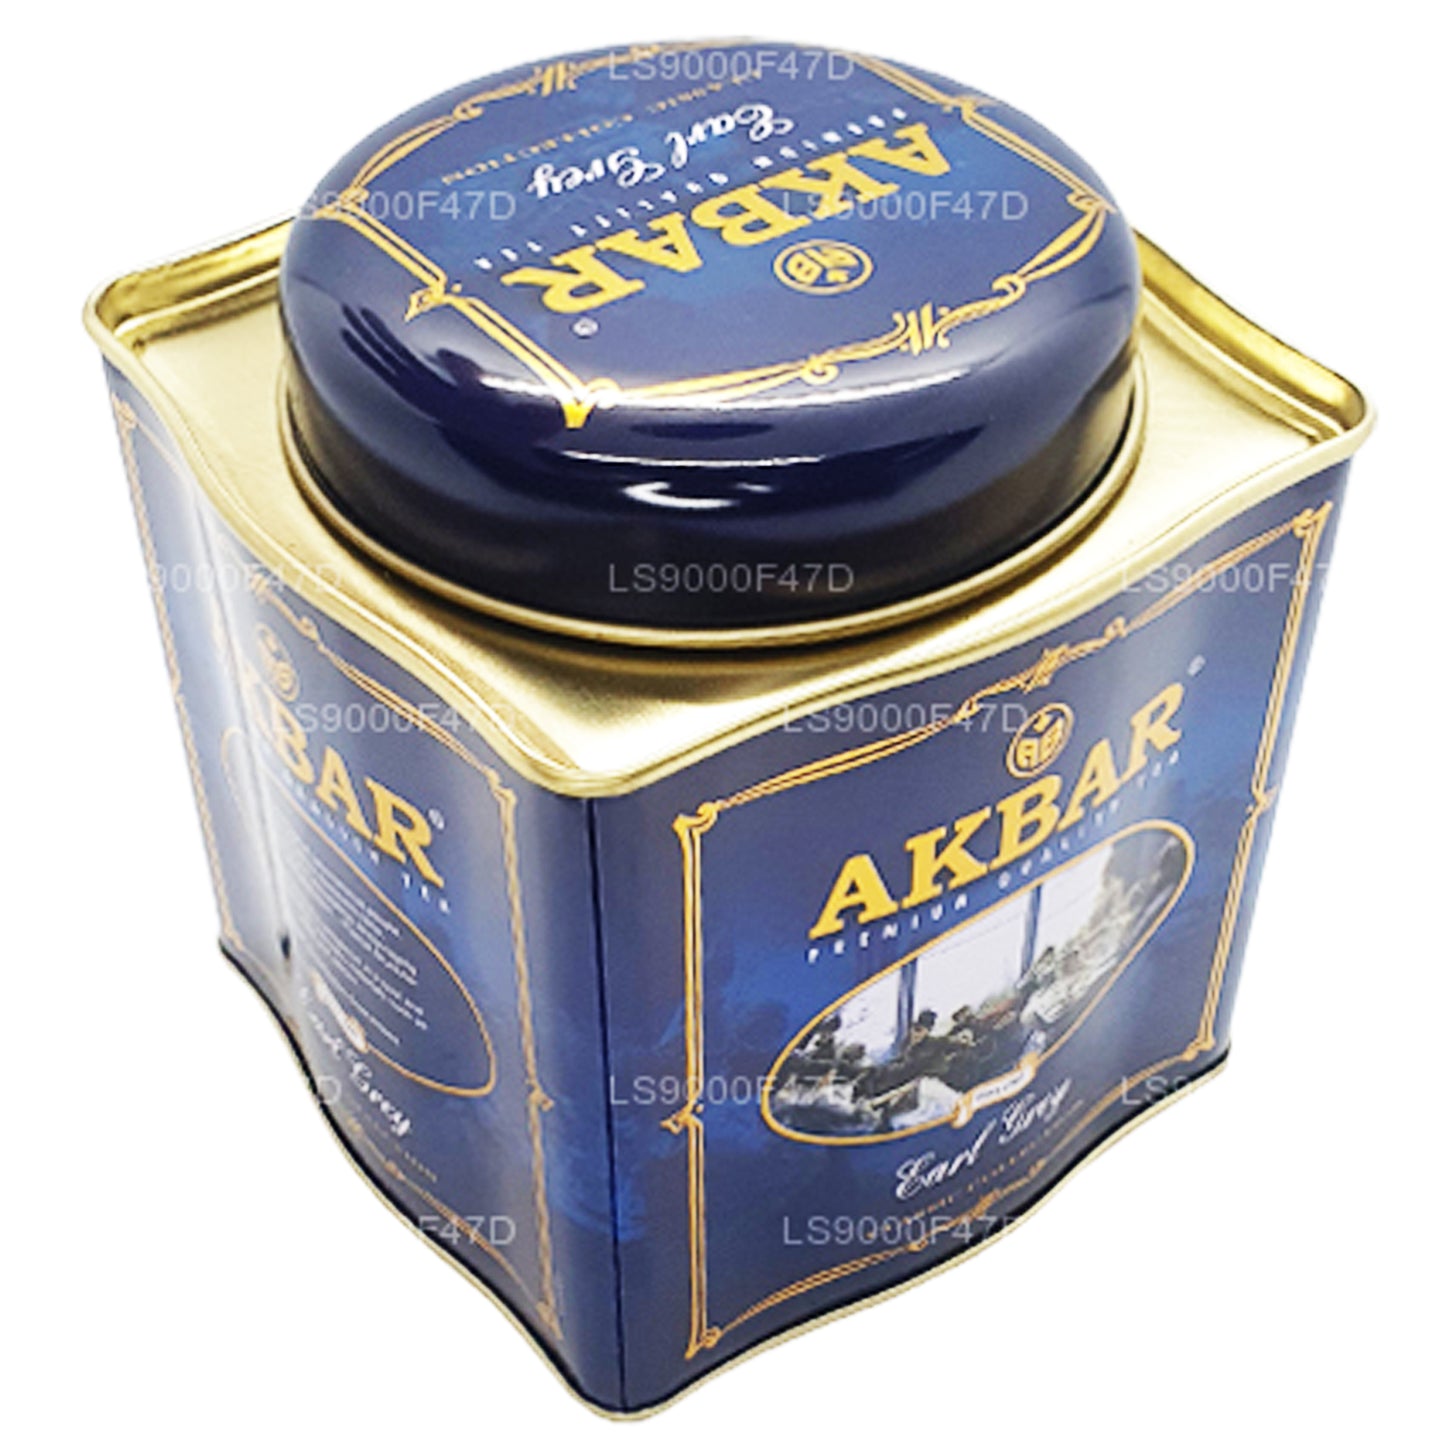 Thé aux feuilles Akbar Classic Earl Grey (250 g), boîte